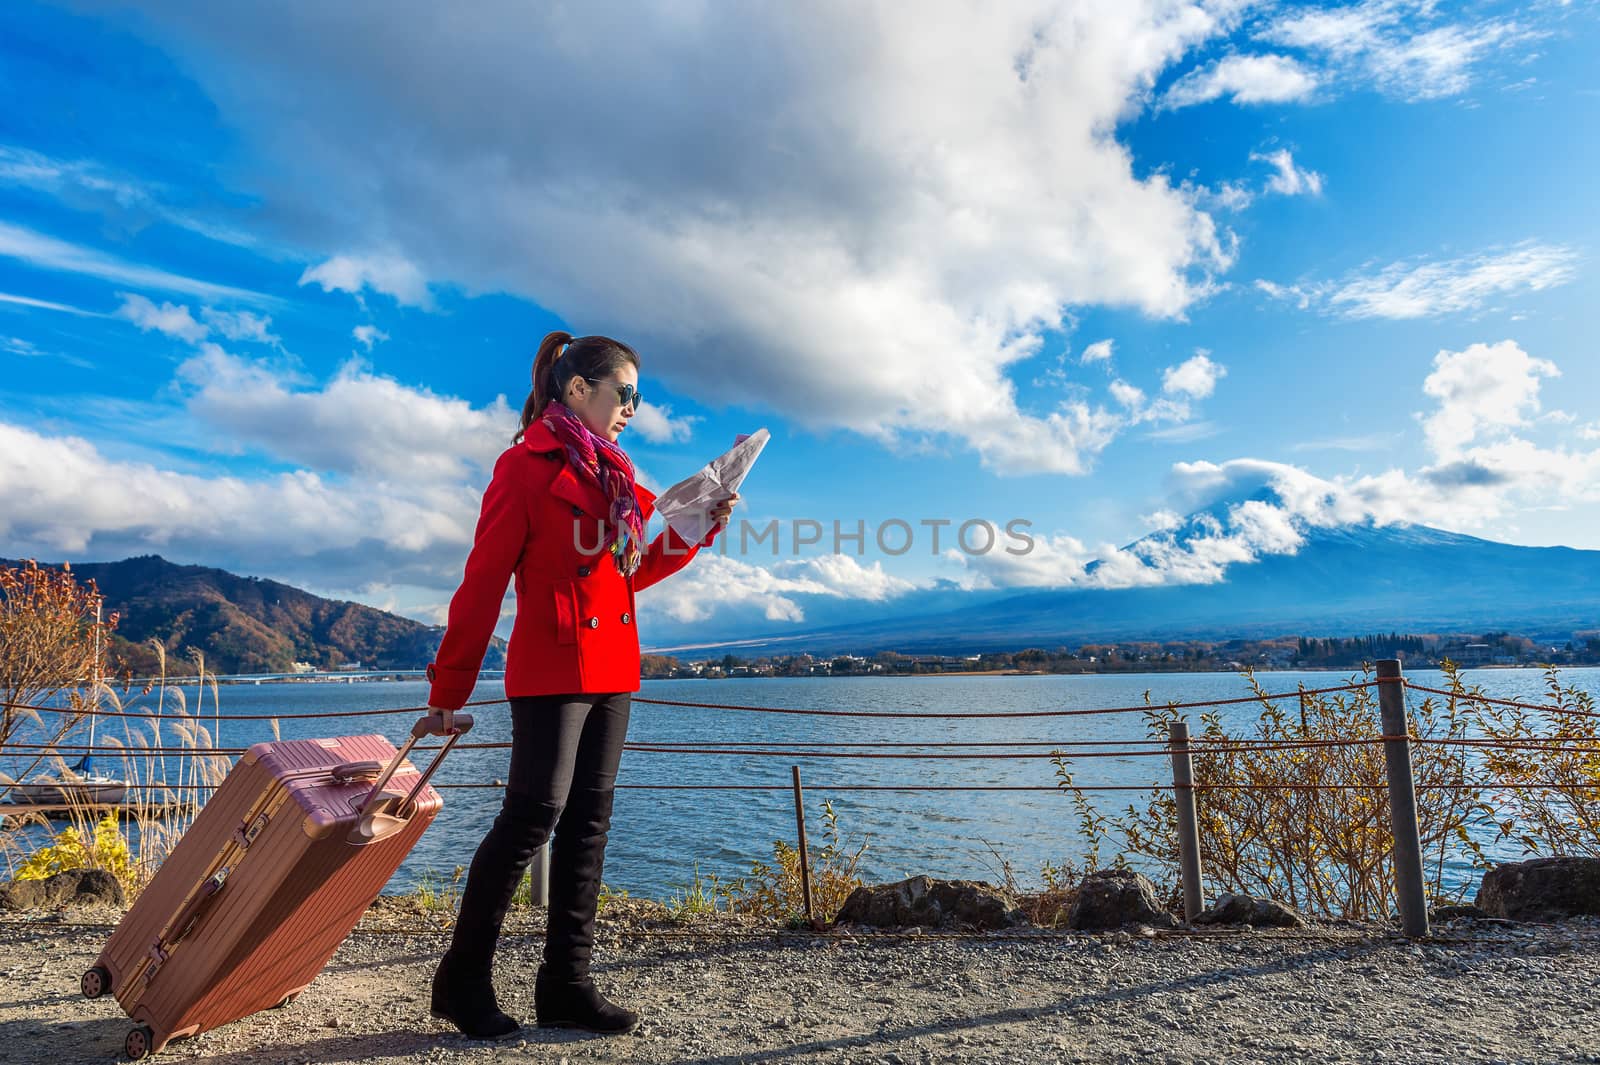 Tourist with baggage and map at Fuji mountain, Kawaguchiko in Japan.